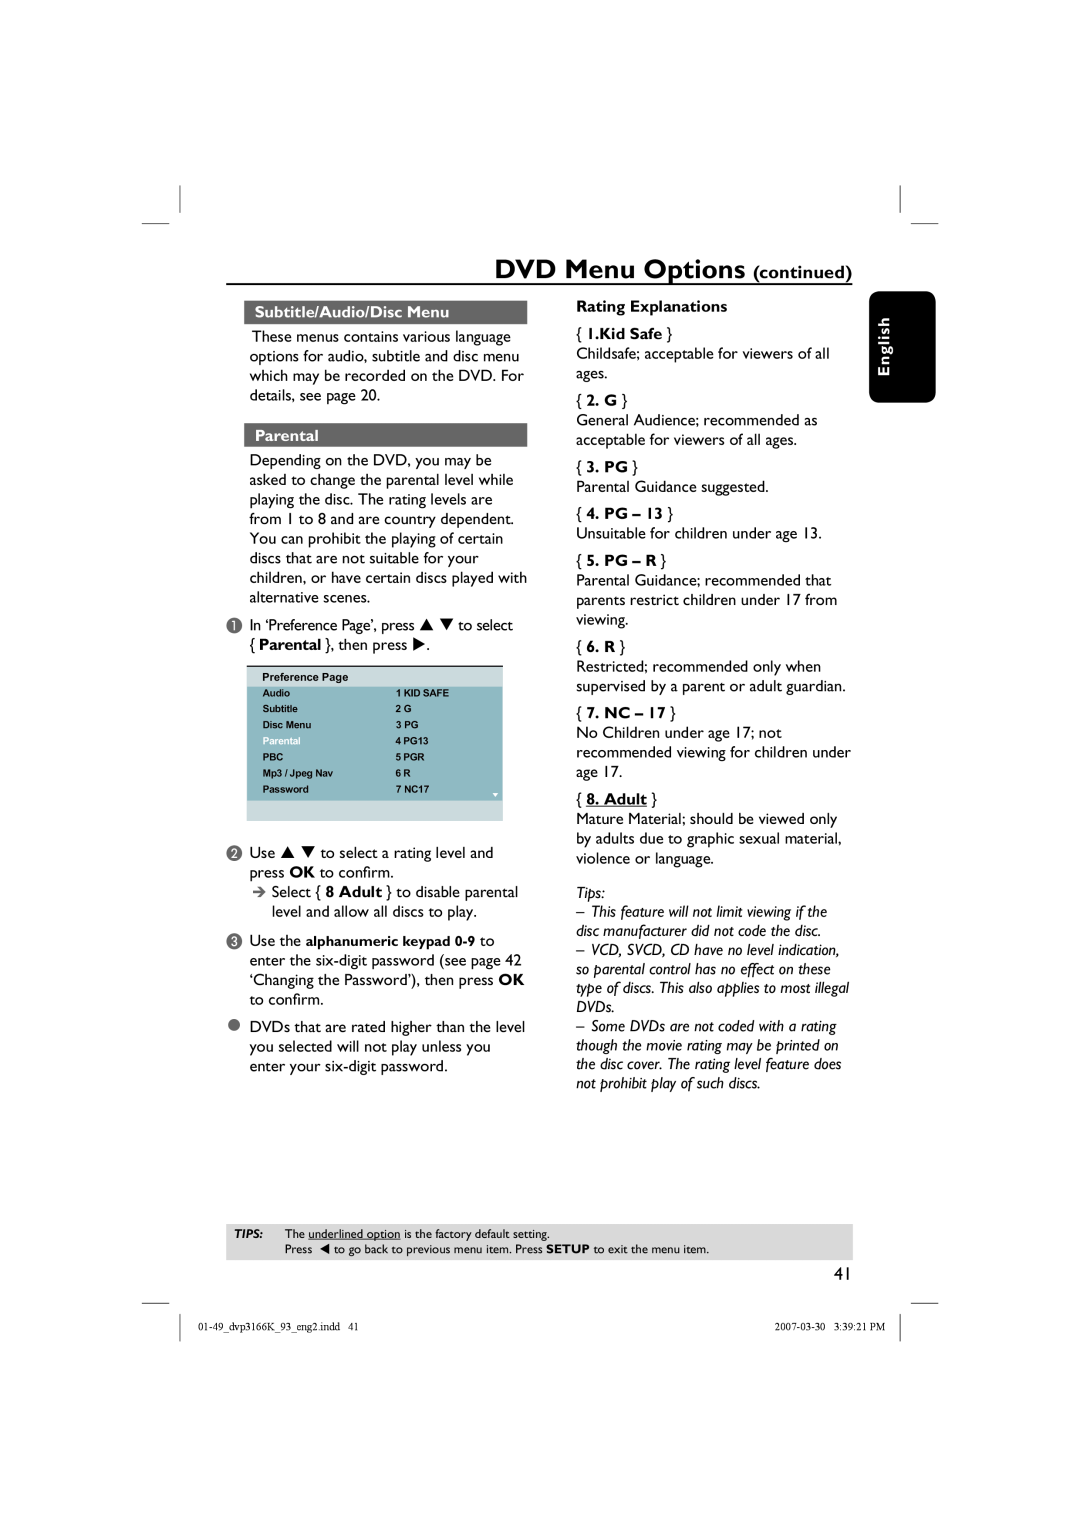 Philips DVP3166K Subtitle/Audio/Disc Menu, Parental, Rating Explanations 1.Kid Safe, 2. G, 3. PG, 4. PG, Pg - R, 6. R 